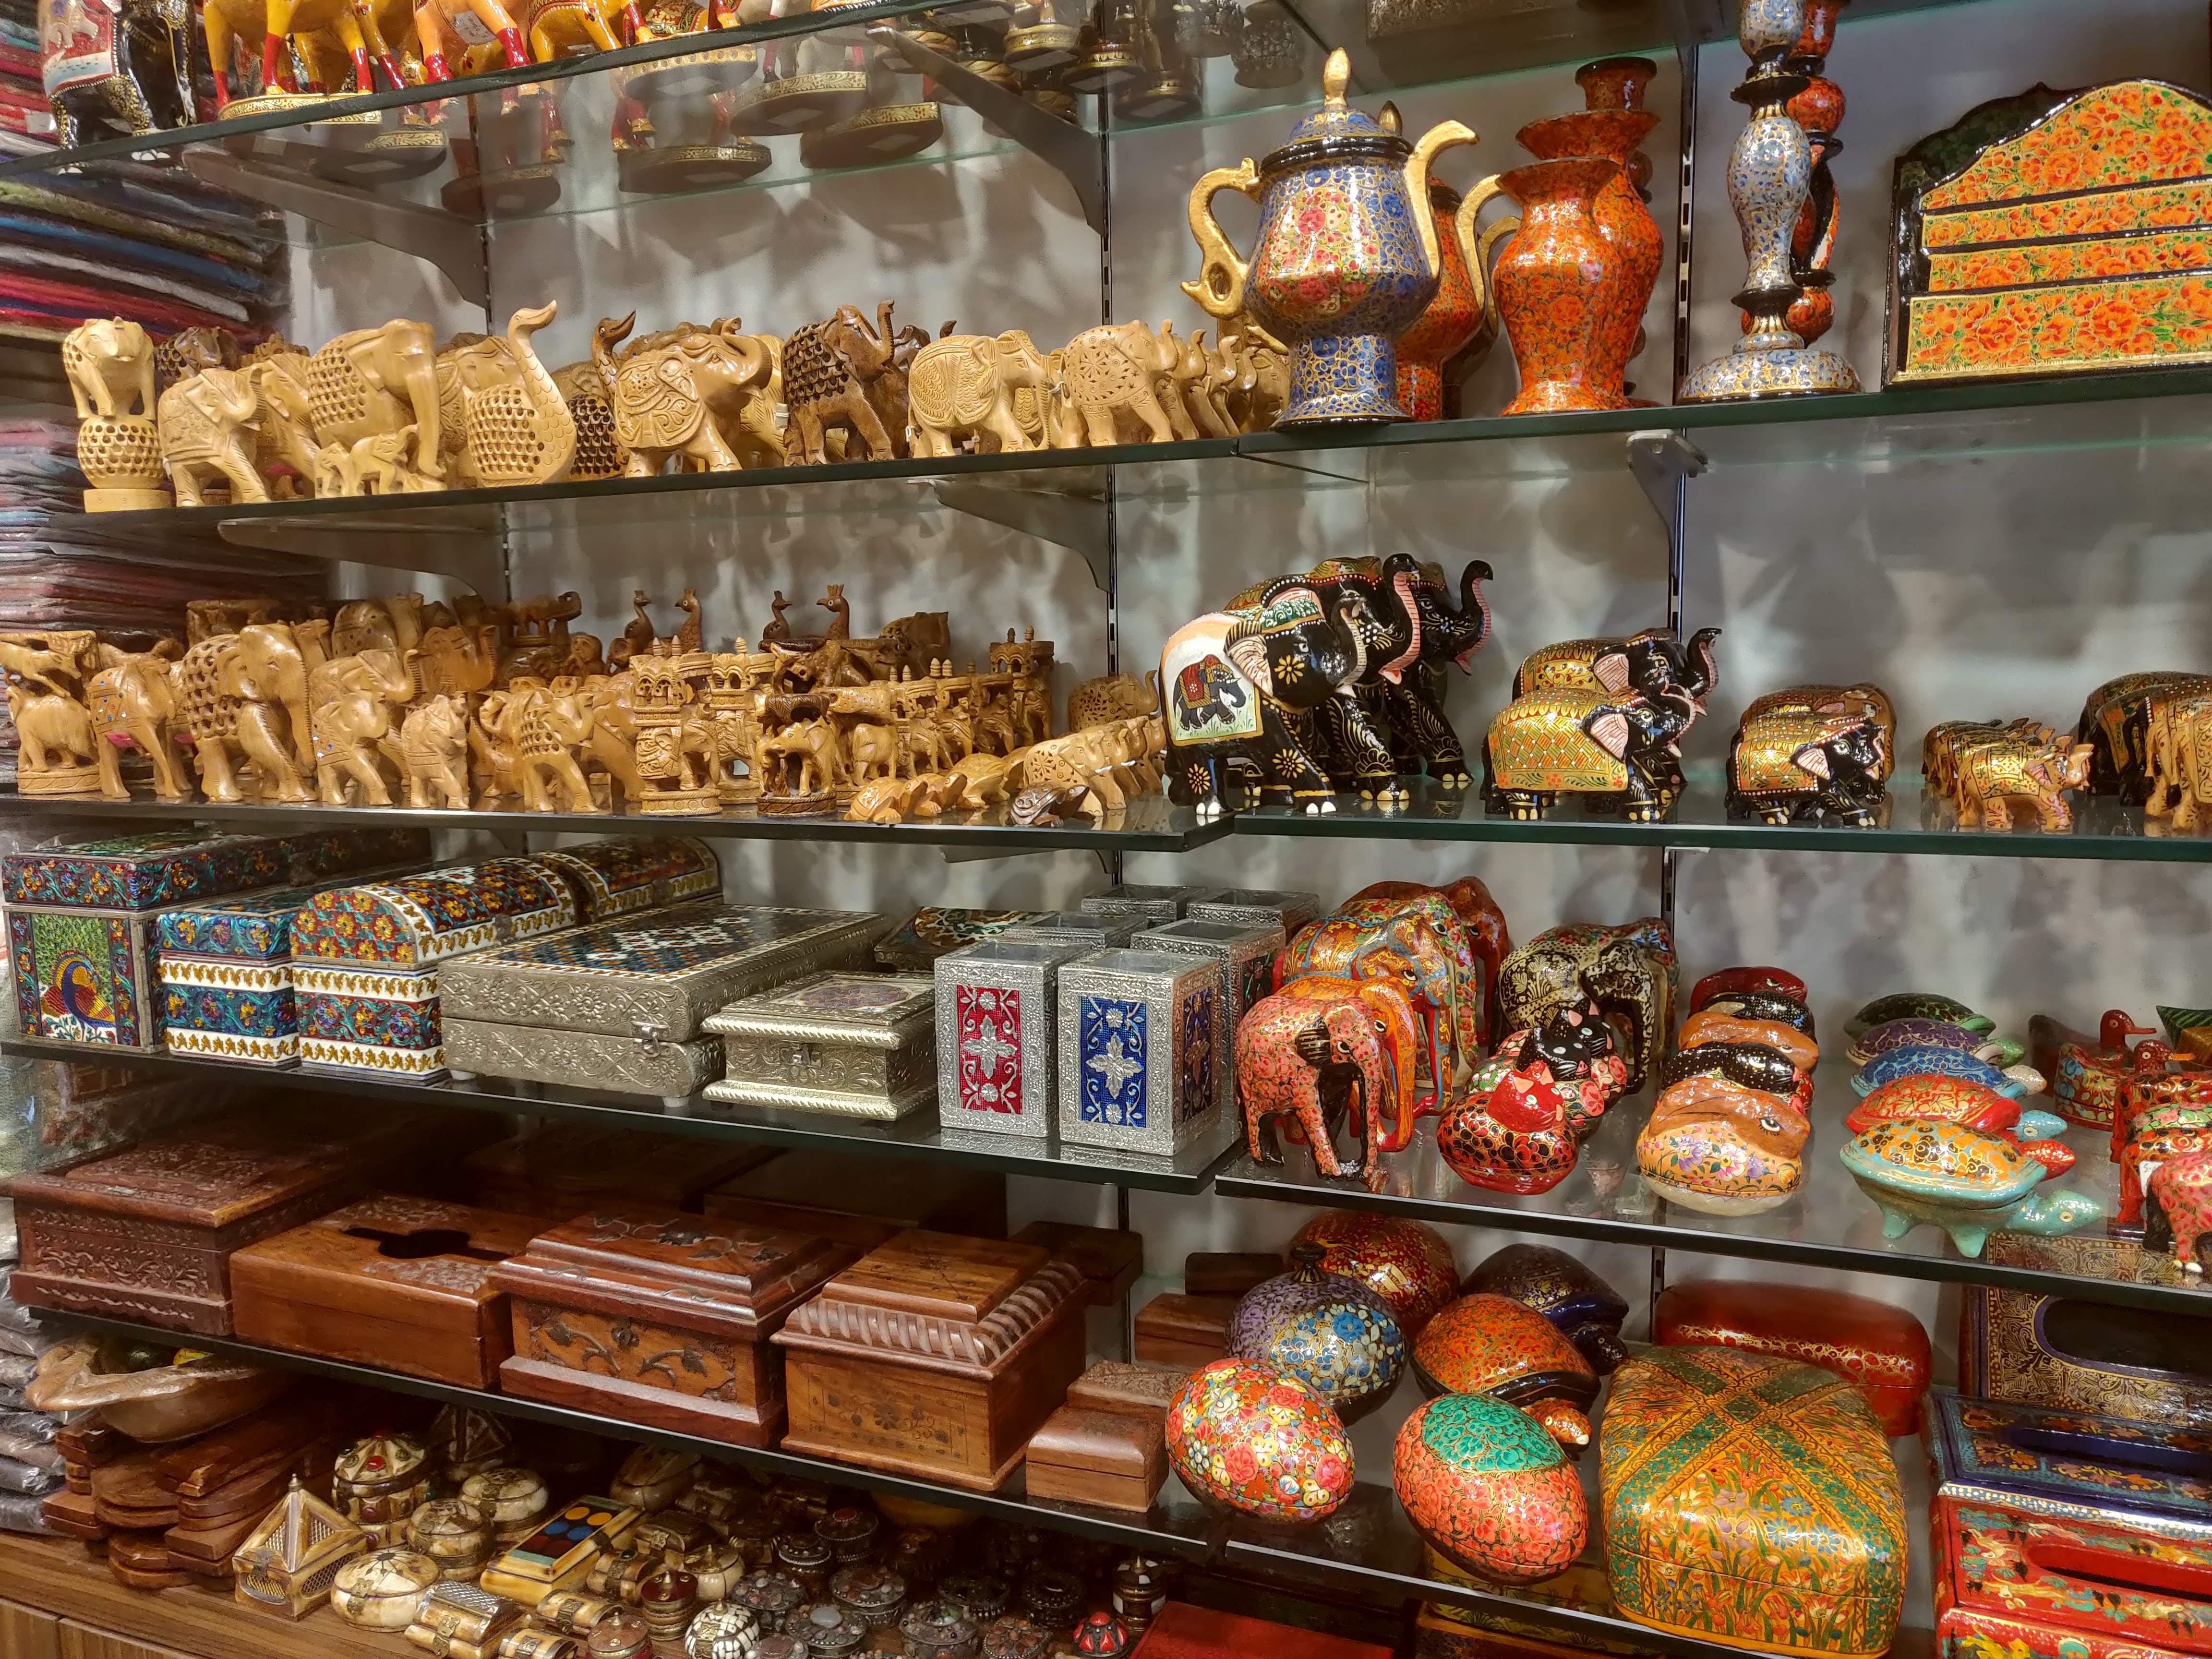 Bakery,Food,Pâtisserie,Delicatessen,Cuisine,Delicacy,Pastry,Display case,Baked goods,Snack